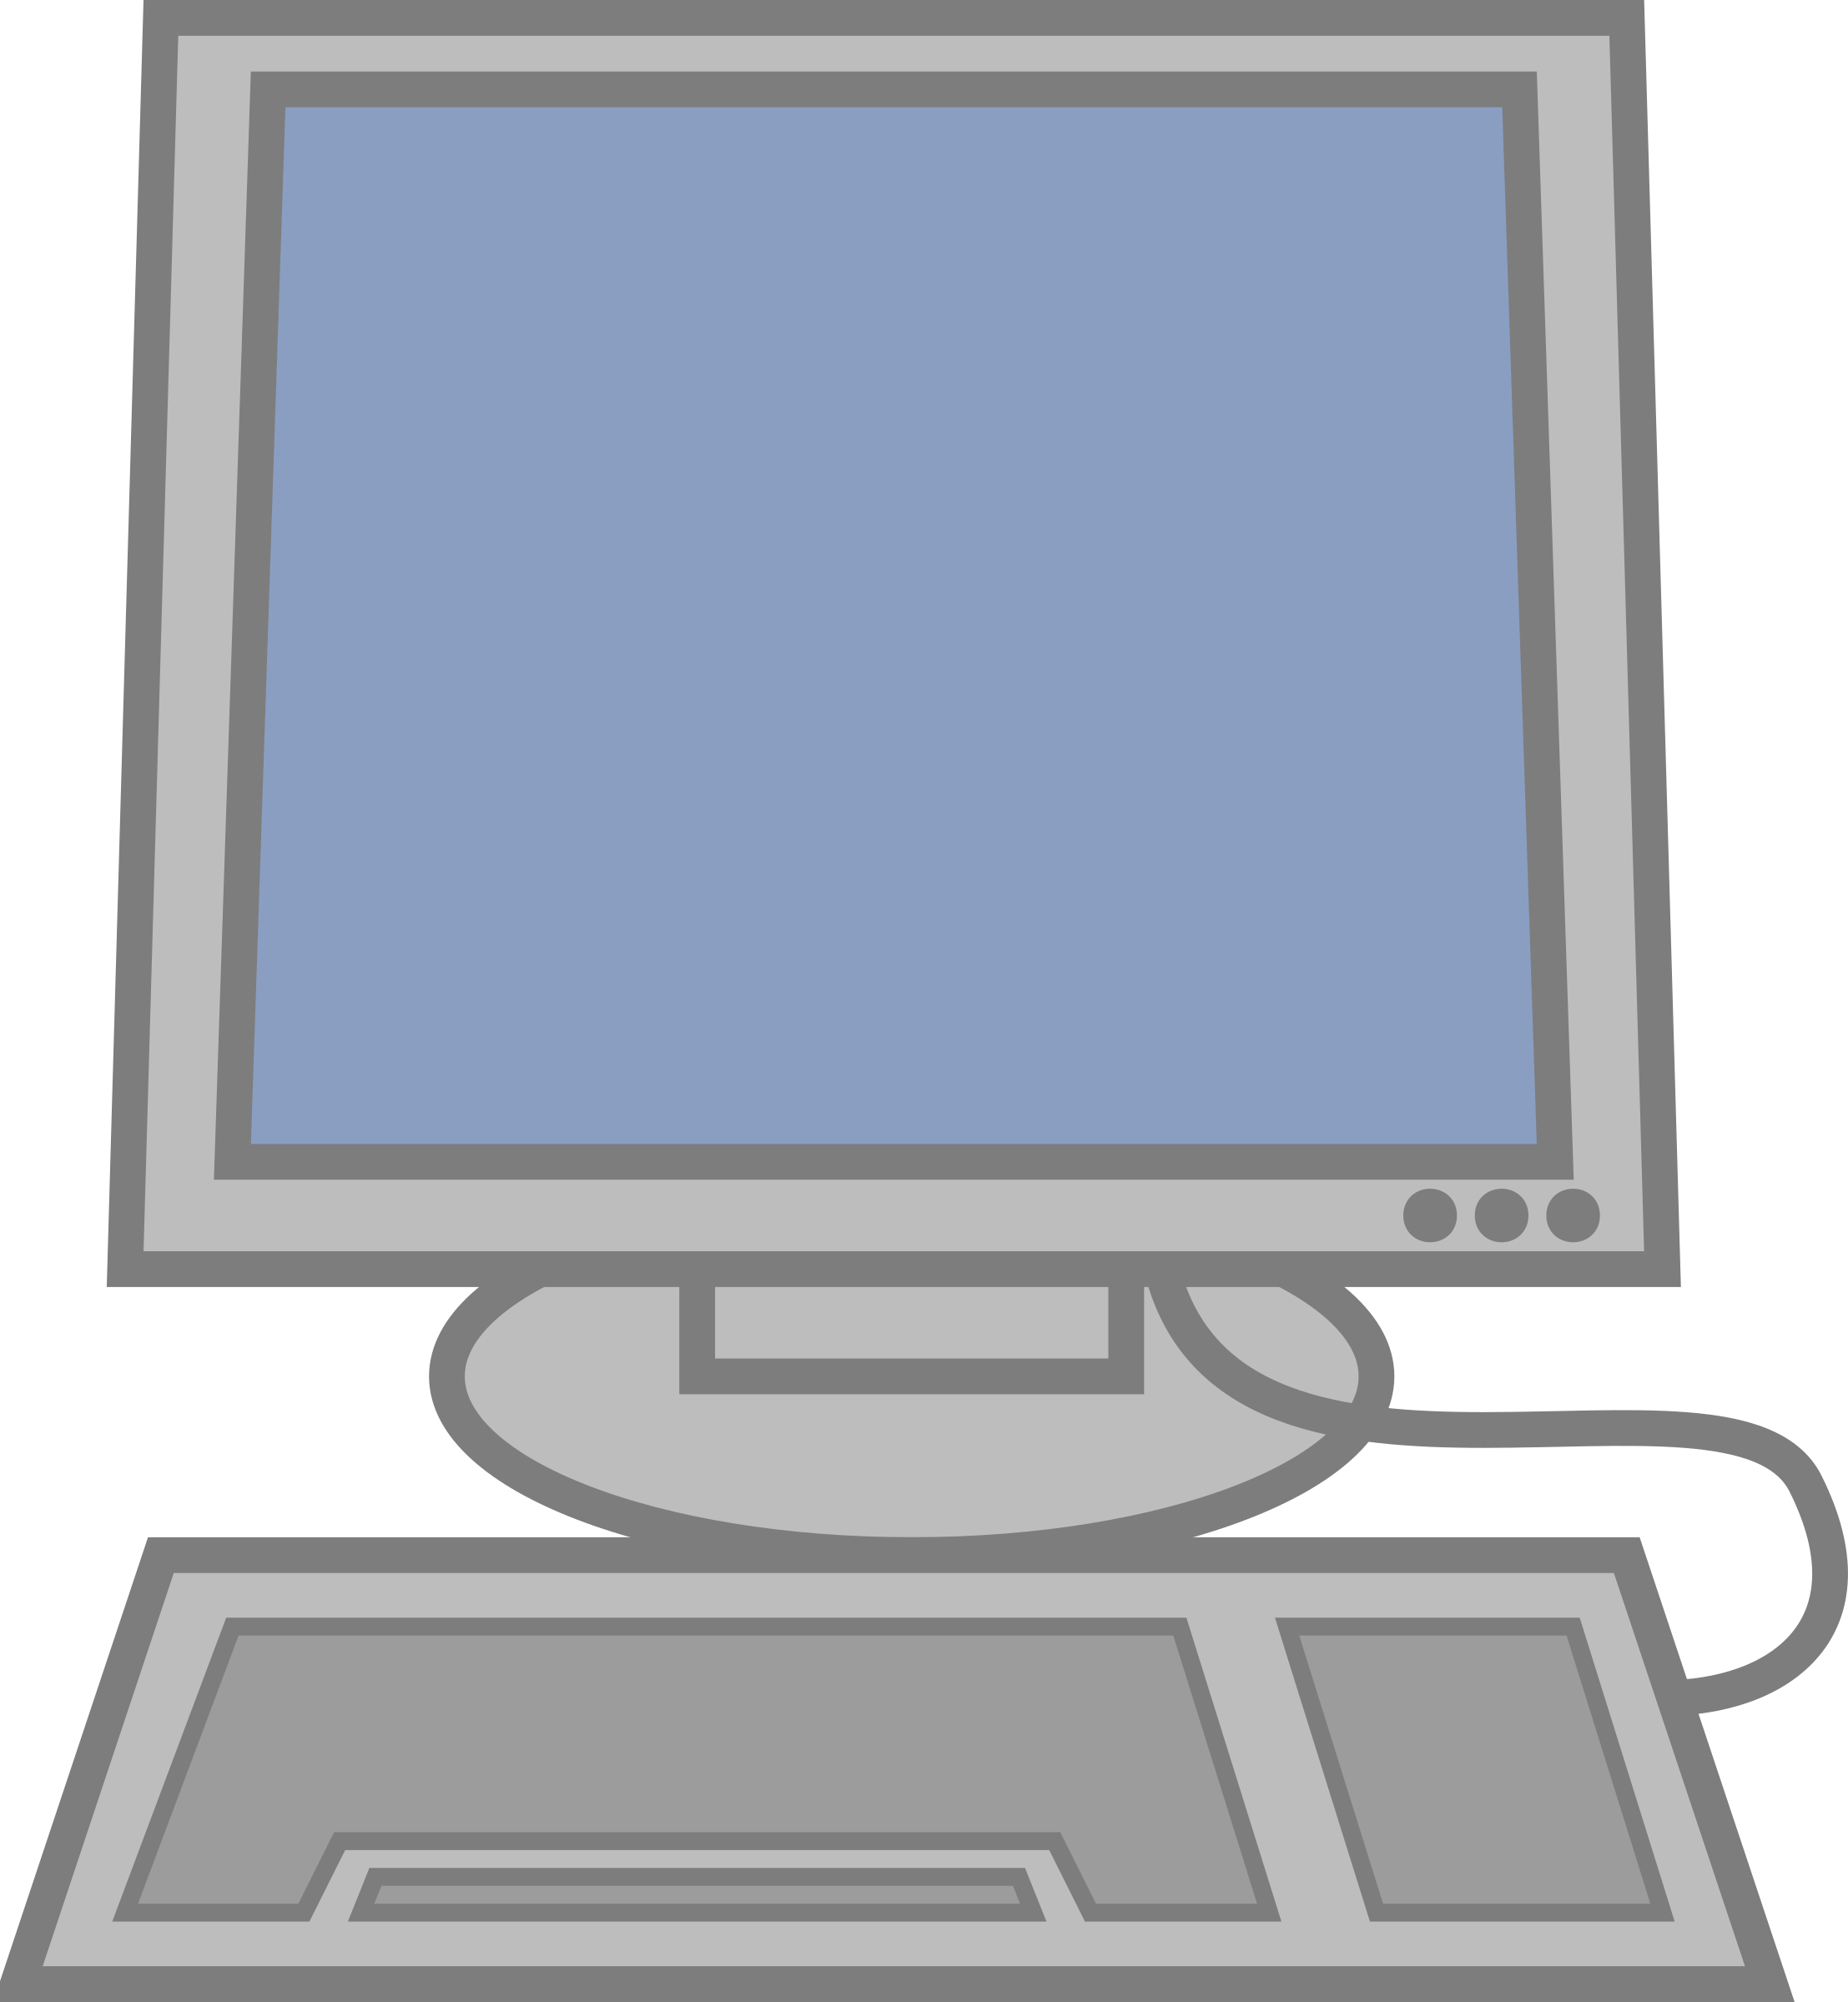 Computer clipart computer workstation, Computer computer